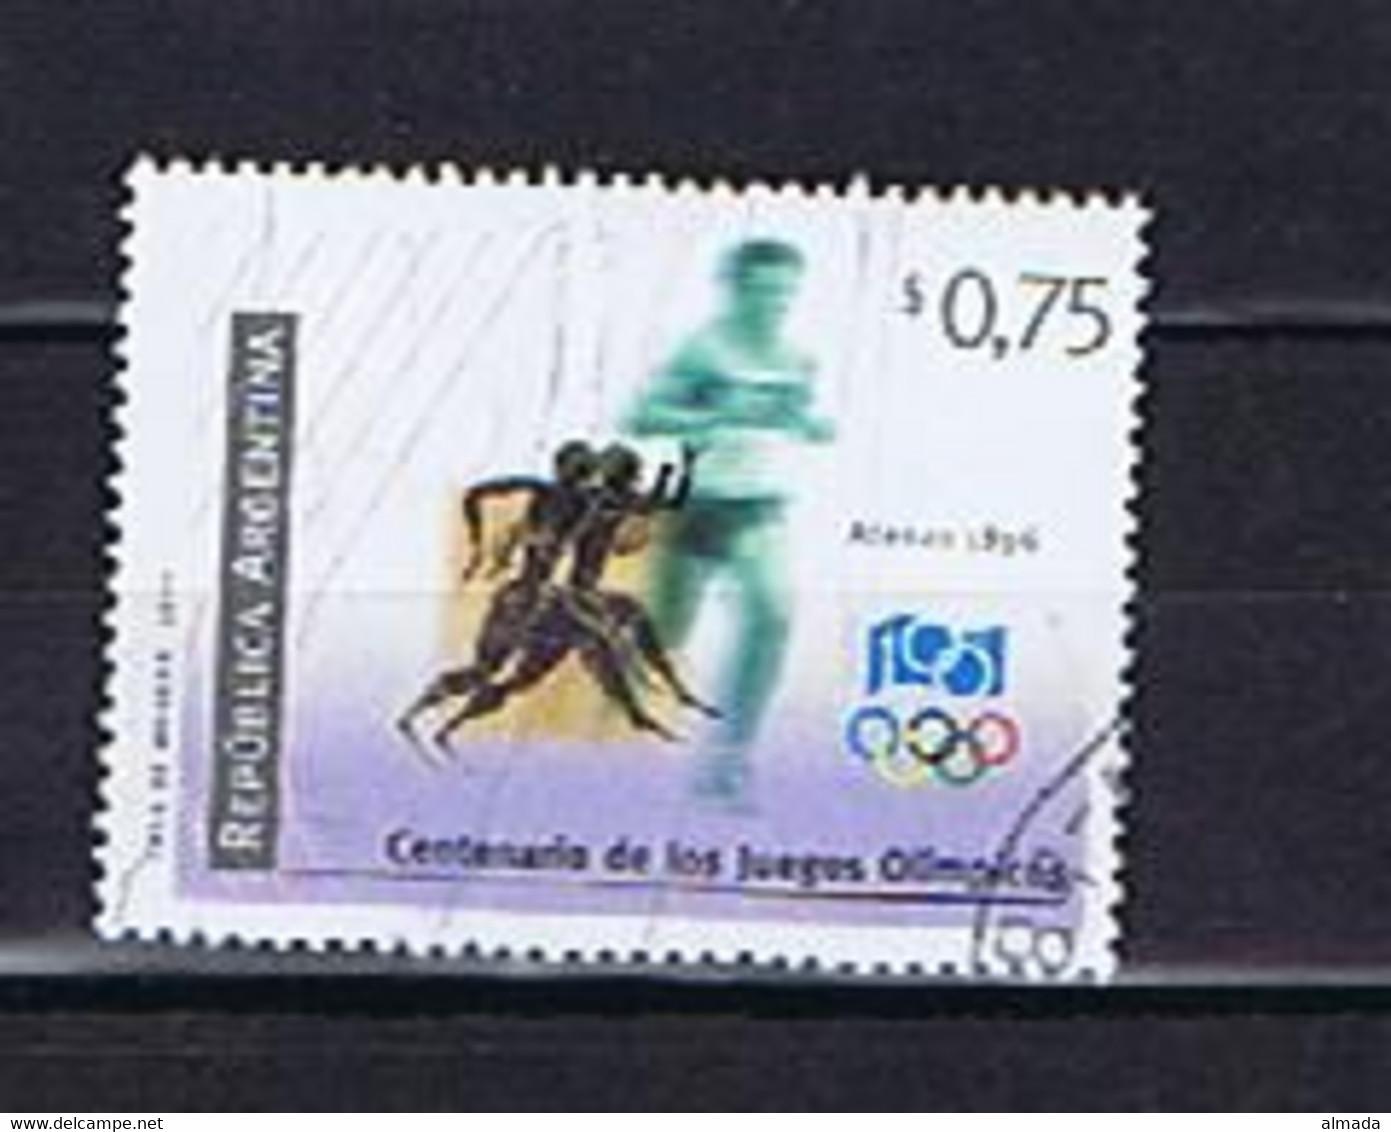 Argentina, Argentinien 1996: Michel-Nr. 2293 (2) Used, Gestempelt - Used Stamps